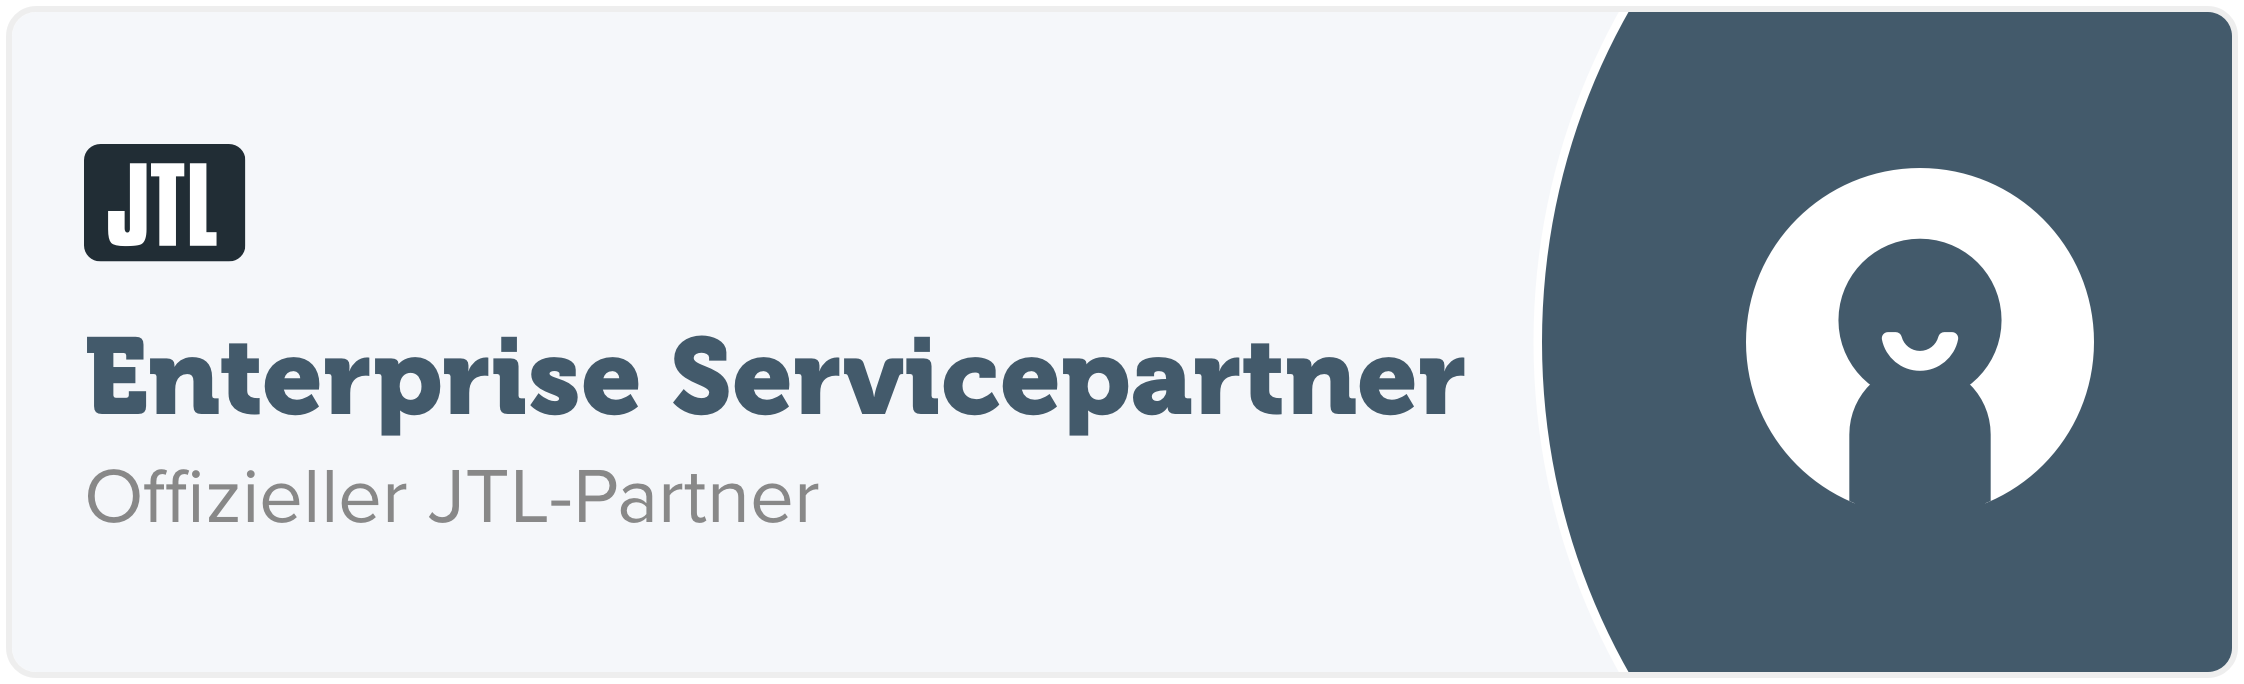 jtl_enterprice-servicepartner